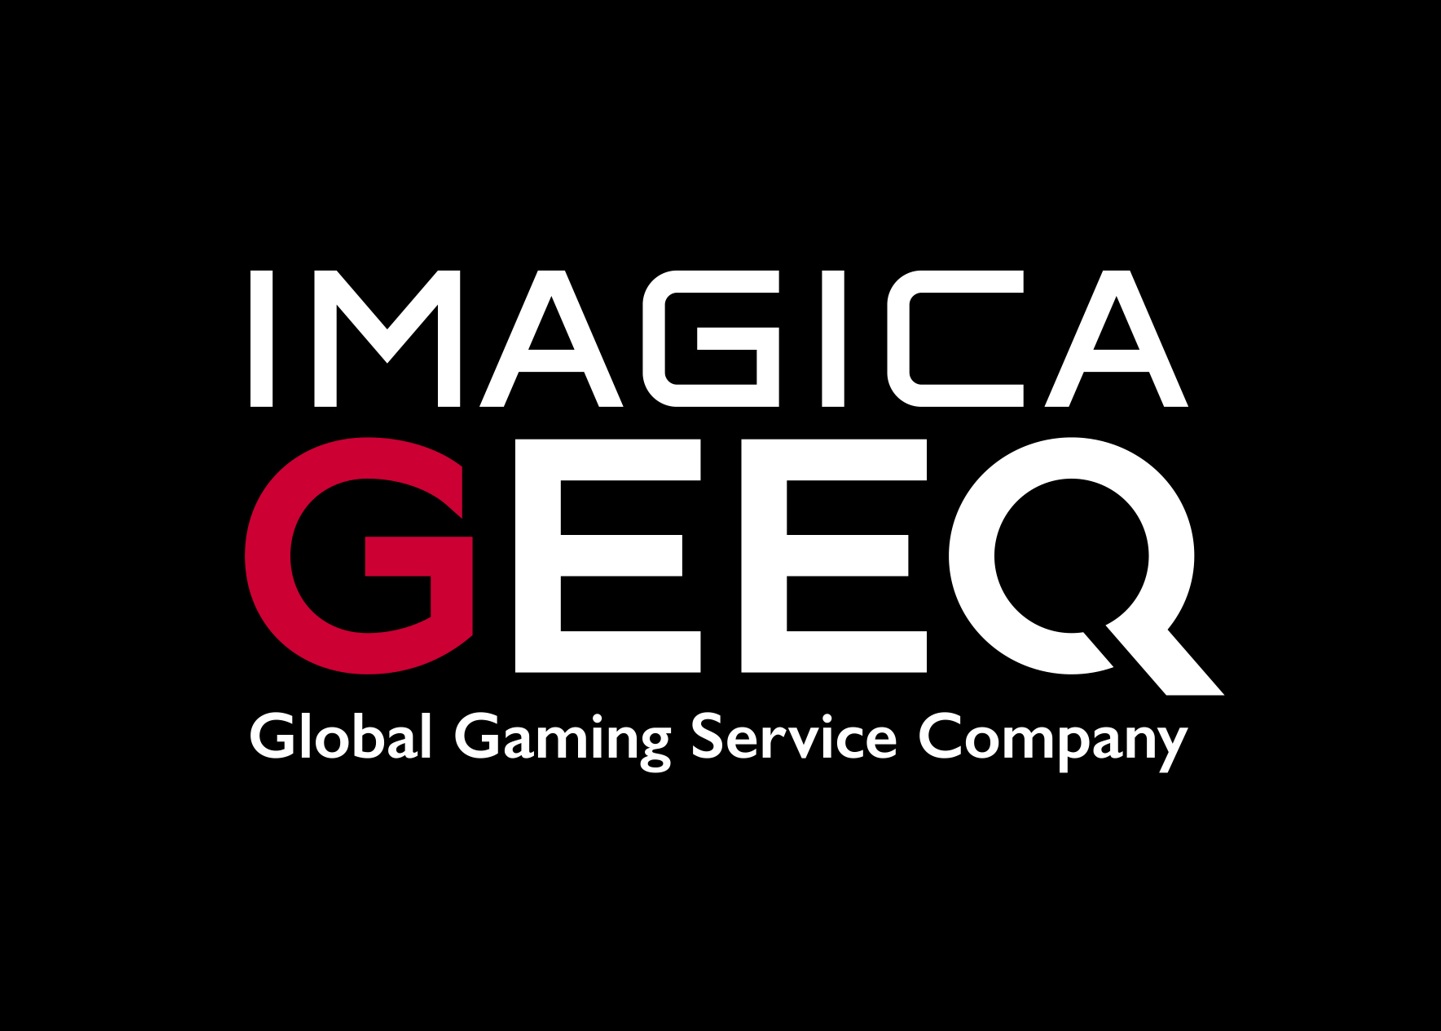 IMAGICA GEEQのミッションである”Exceed Expectations！”「期待を超える」顧客価値を創造することを常に念頭に事業を進め、
皆様のお役に立てますよう尽力してまいります。